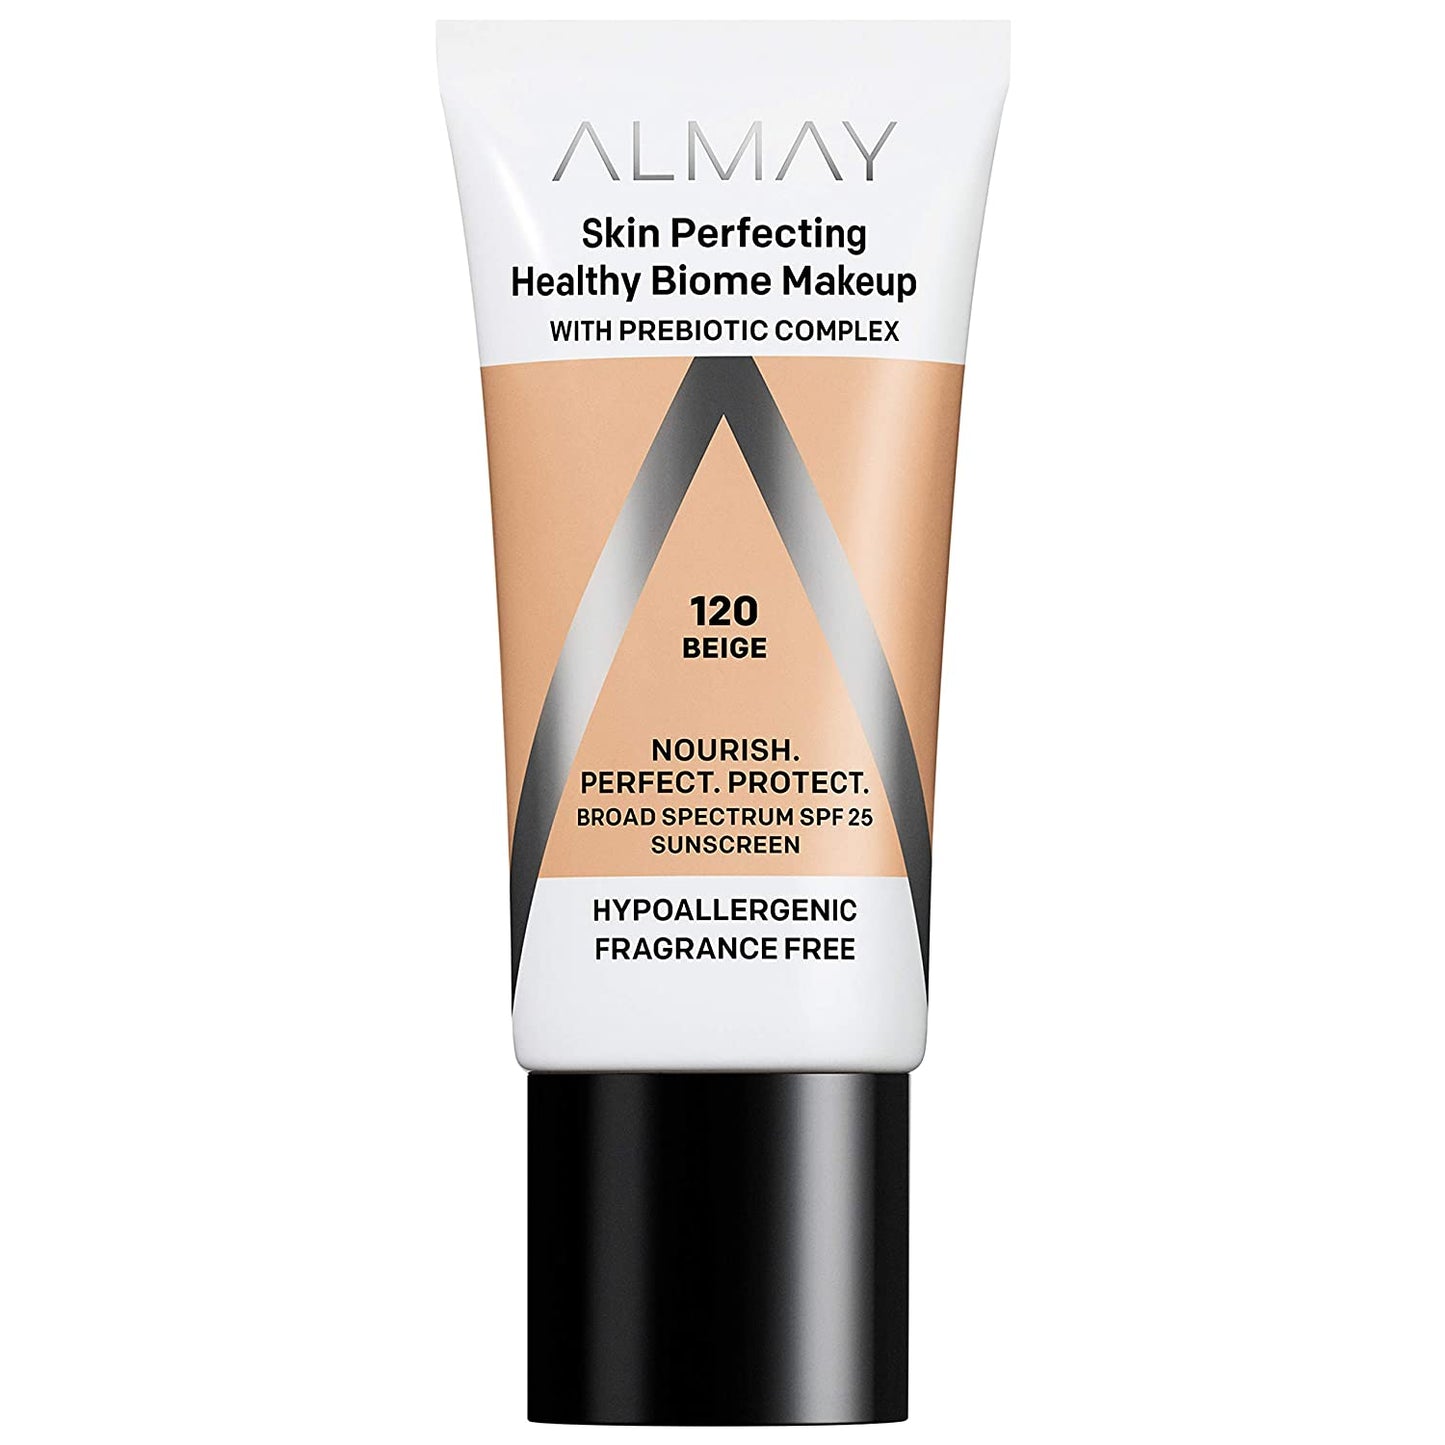 Almay Skin Perfecting Healthy Biome Makeup SPF 25 120 Beige